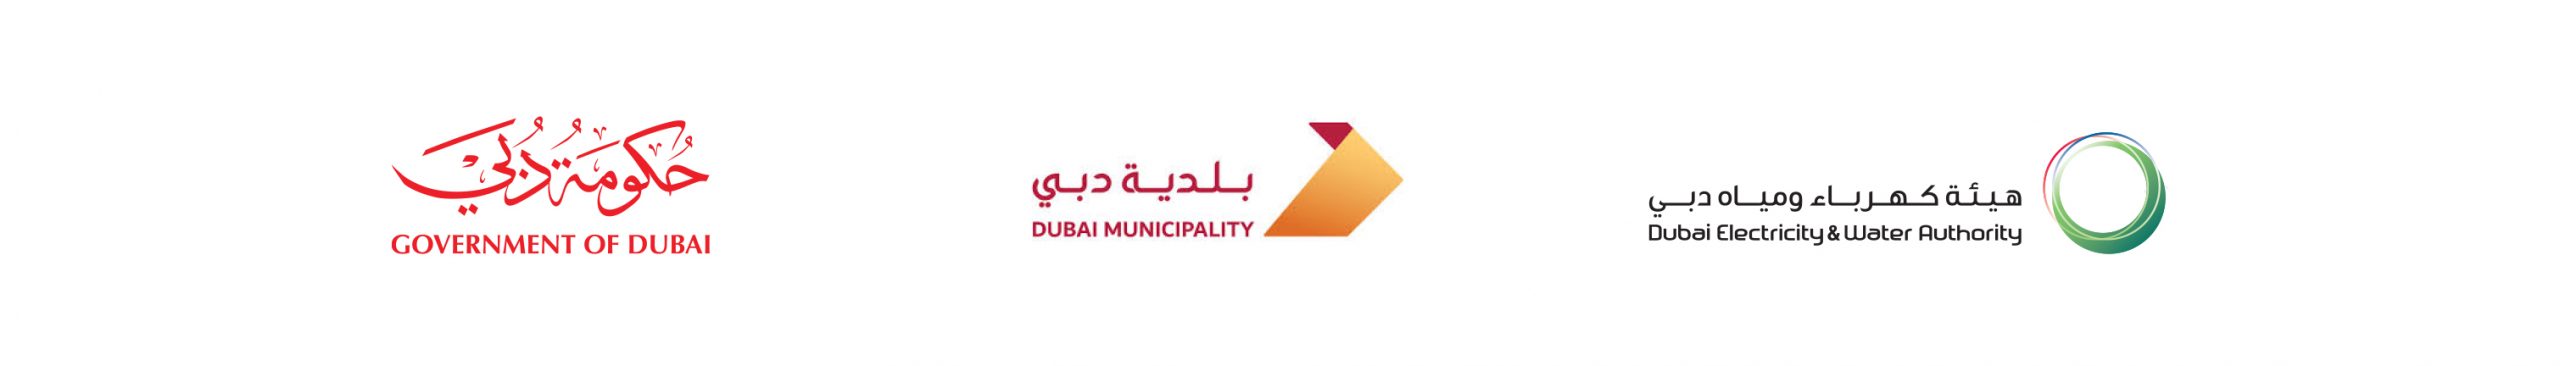 Government of Dubai, Dubai Municipality, Dewa